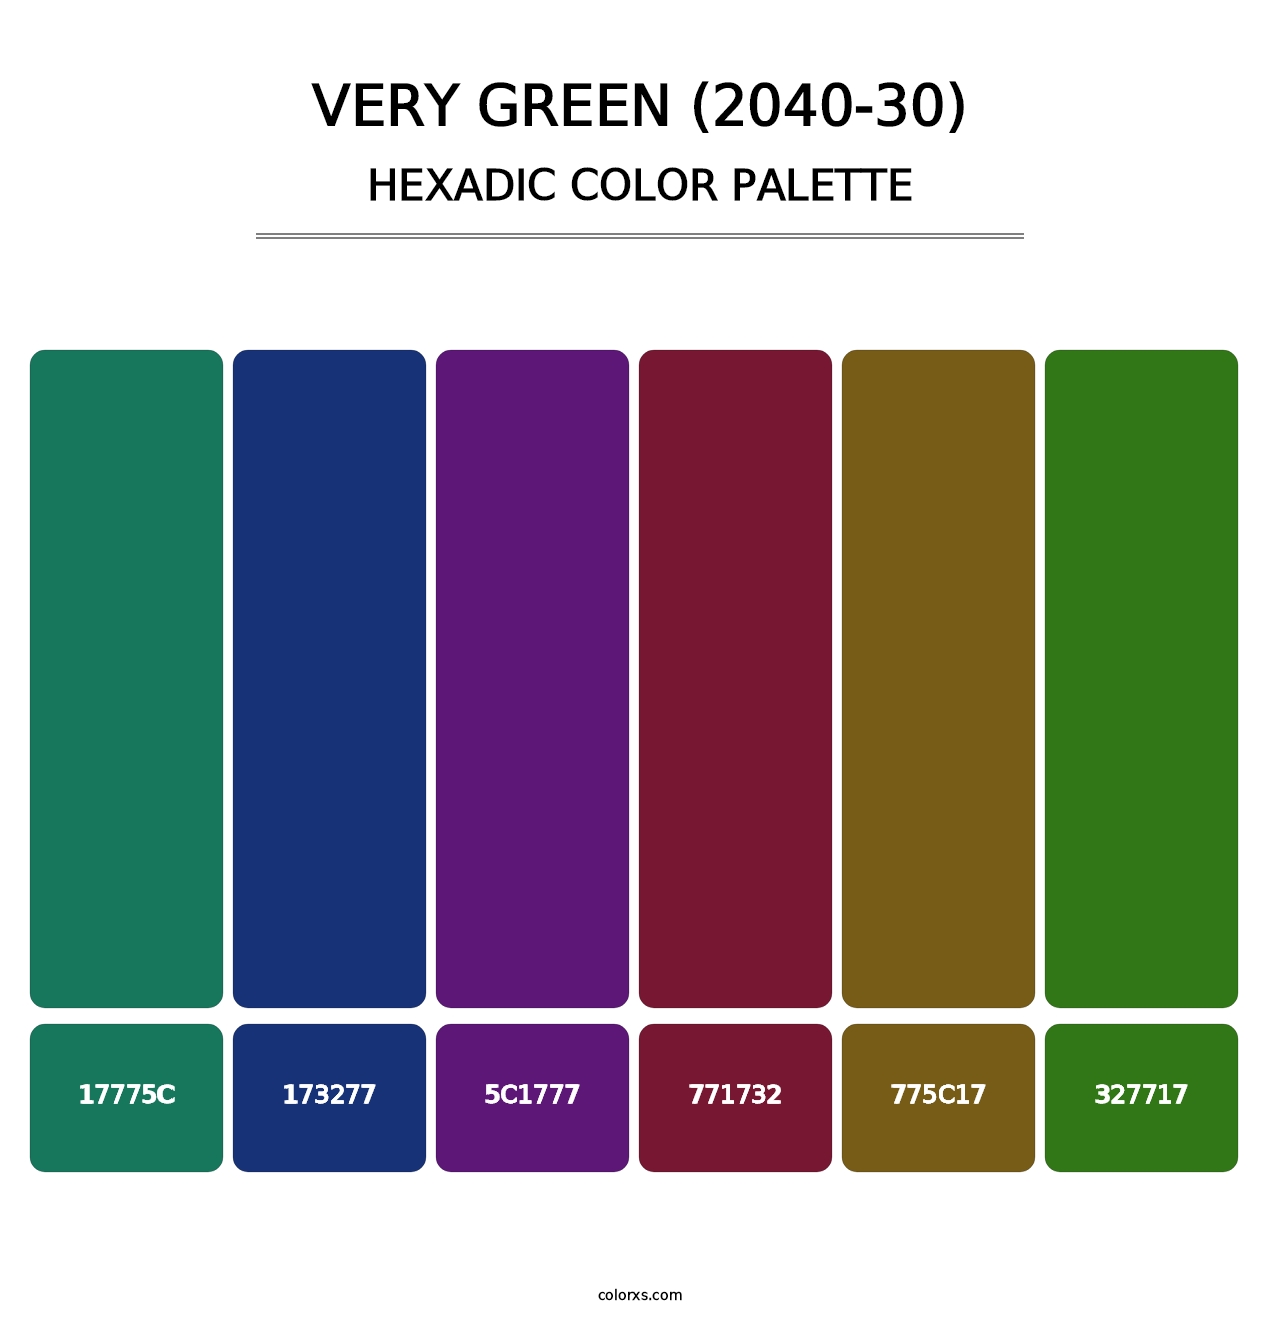 Very Green (2040-30) - Hexadic Color Palette